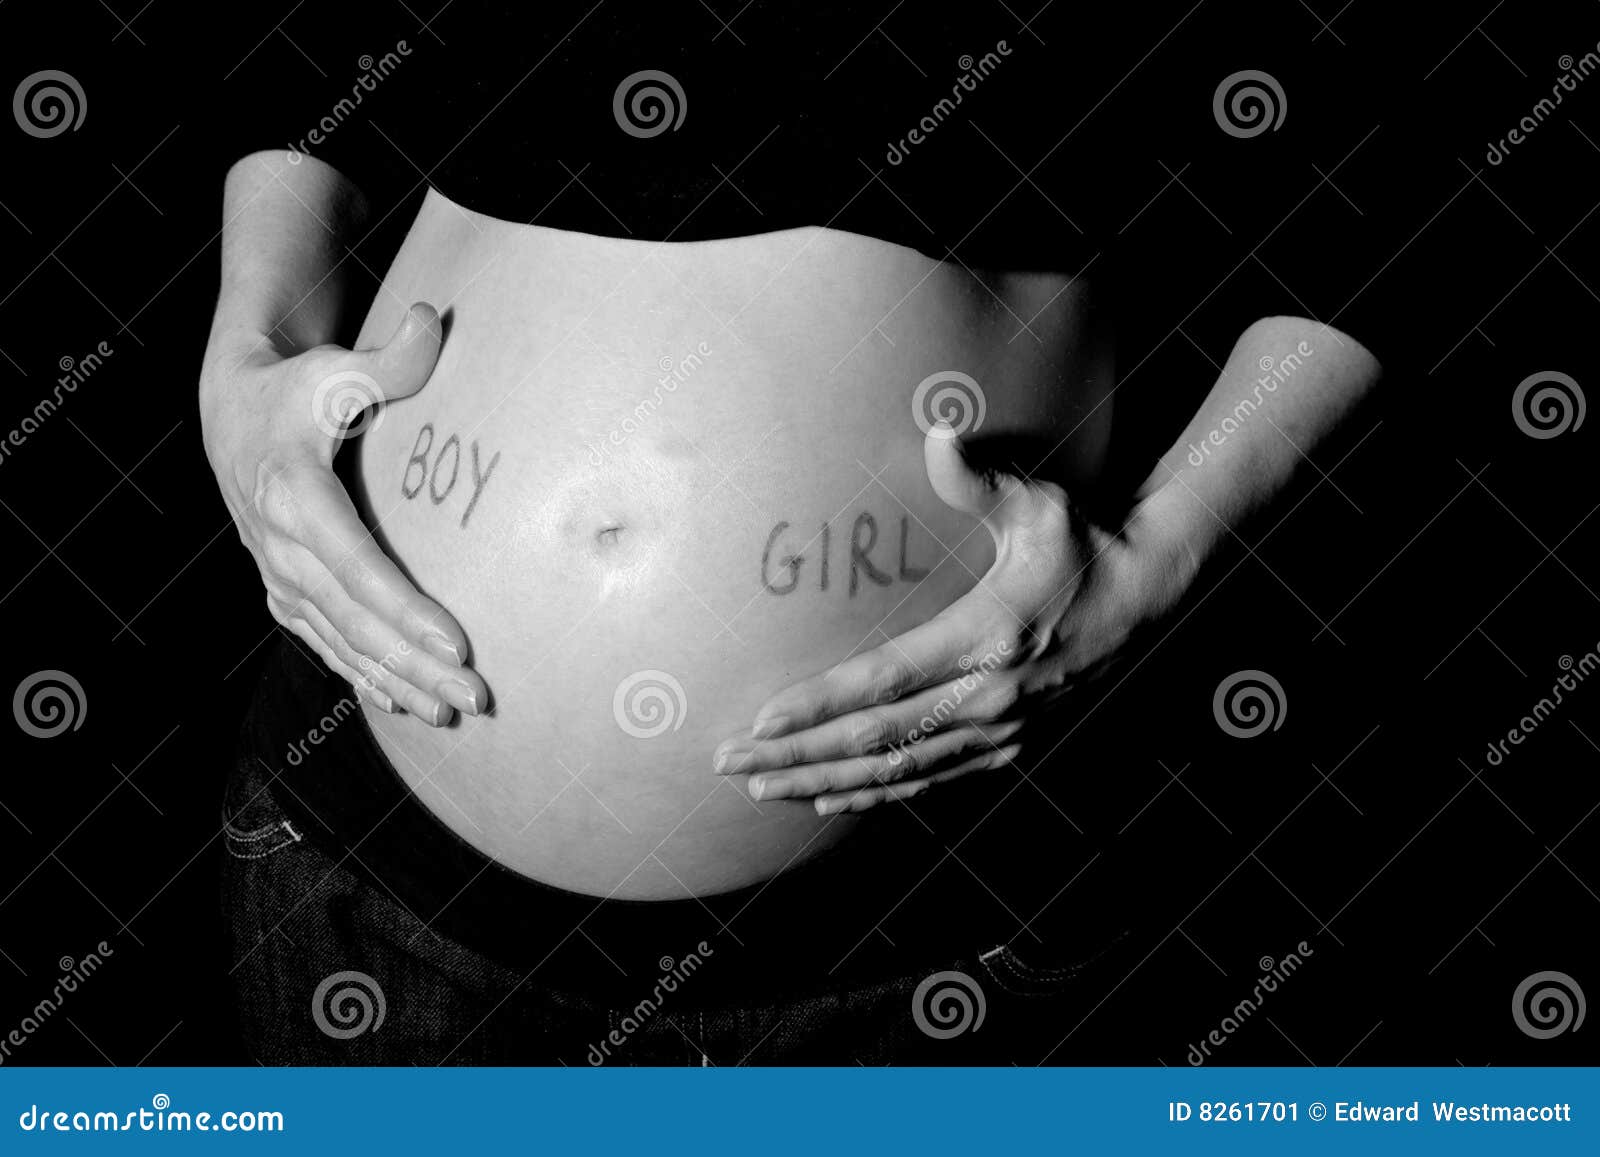 Boy or girl stock image. Image of girl, beautiful, black - 8261701